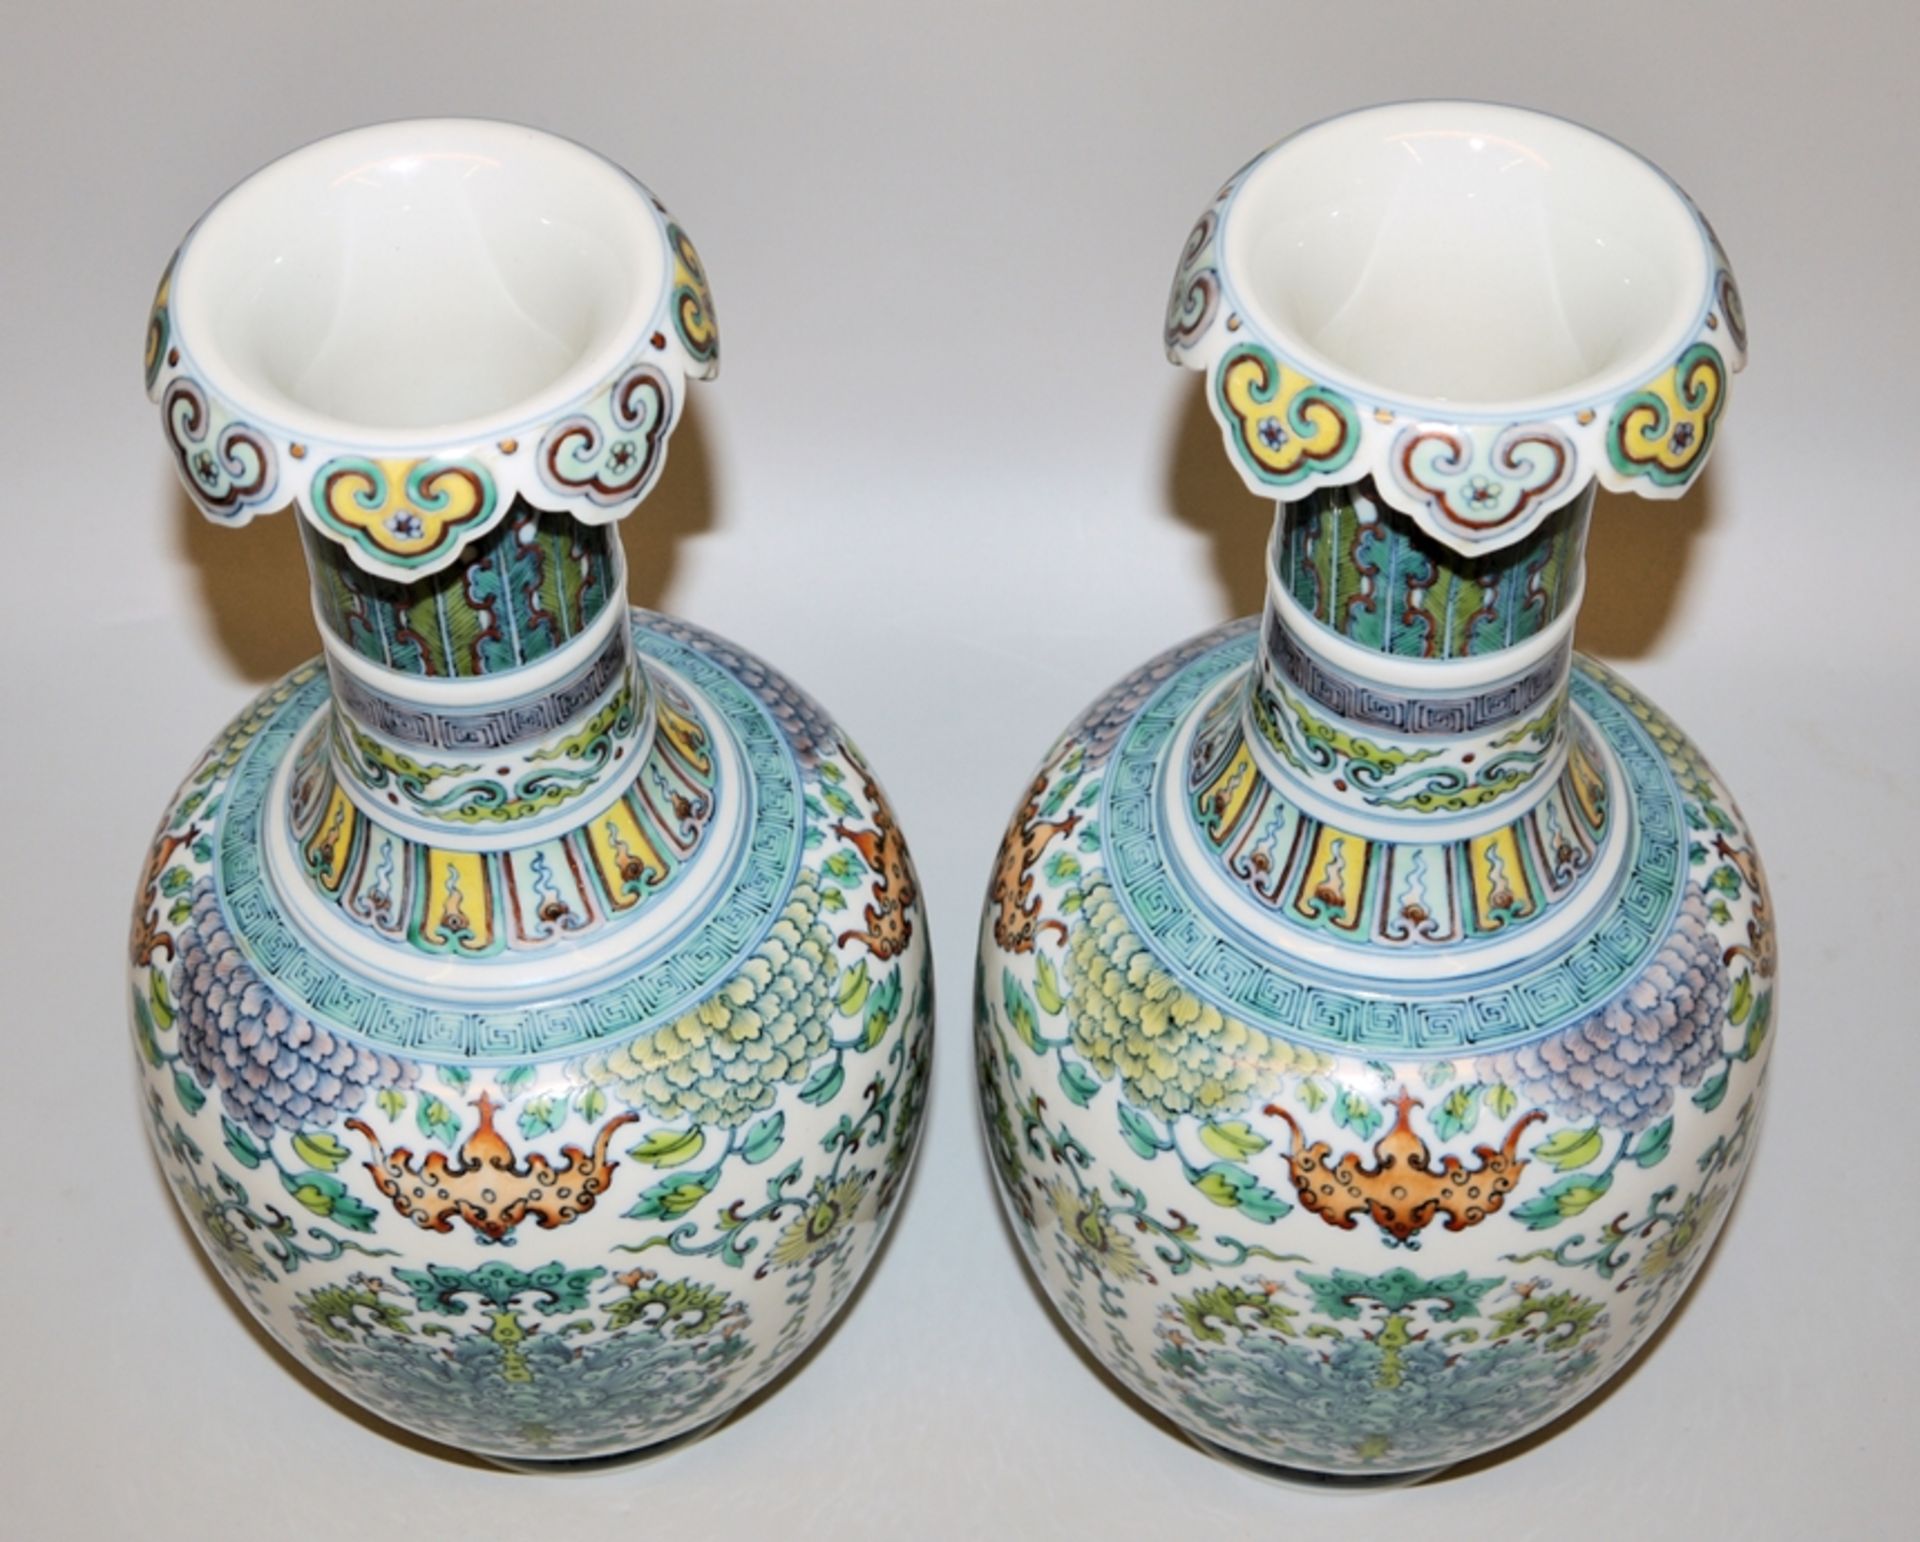 Exquisite pair of doucai vases, probably Republic period, China 20th century  - Image 2 of 3